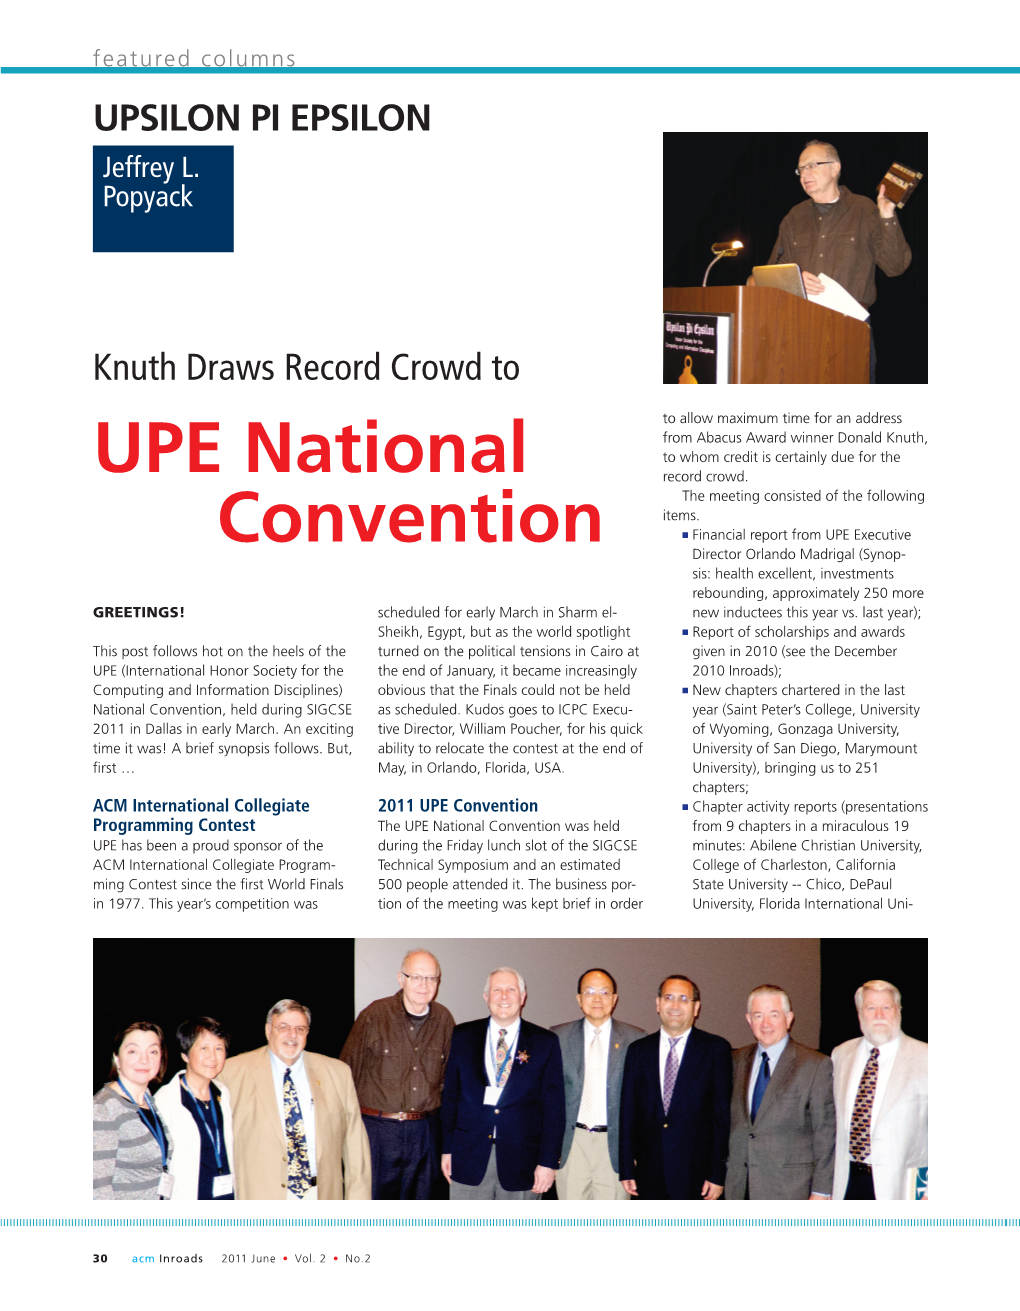 UPSILON PI EPSILON: Knuth Draws Record Crowd to UPE National